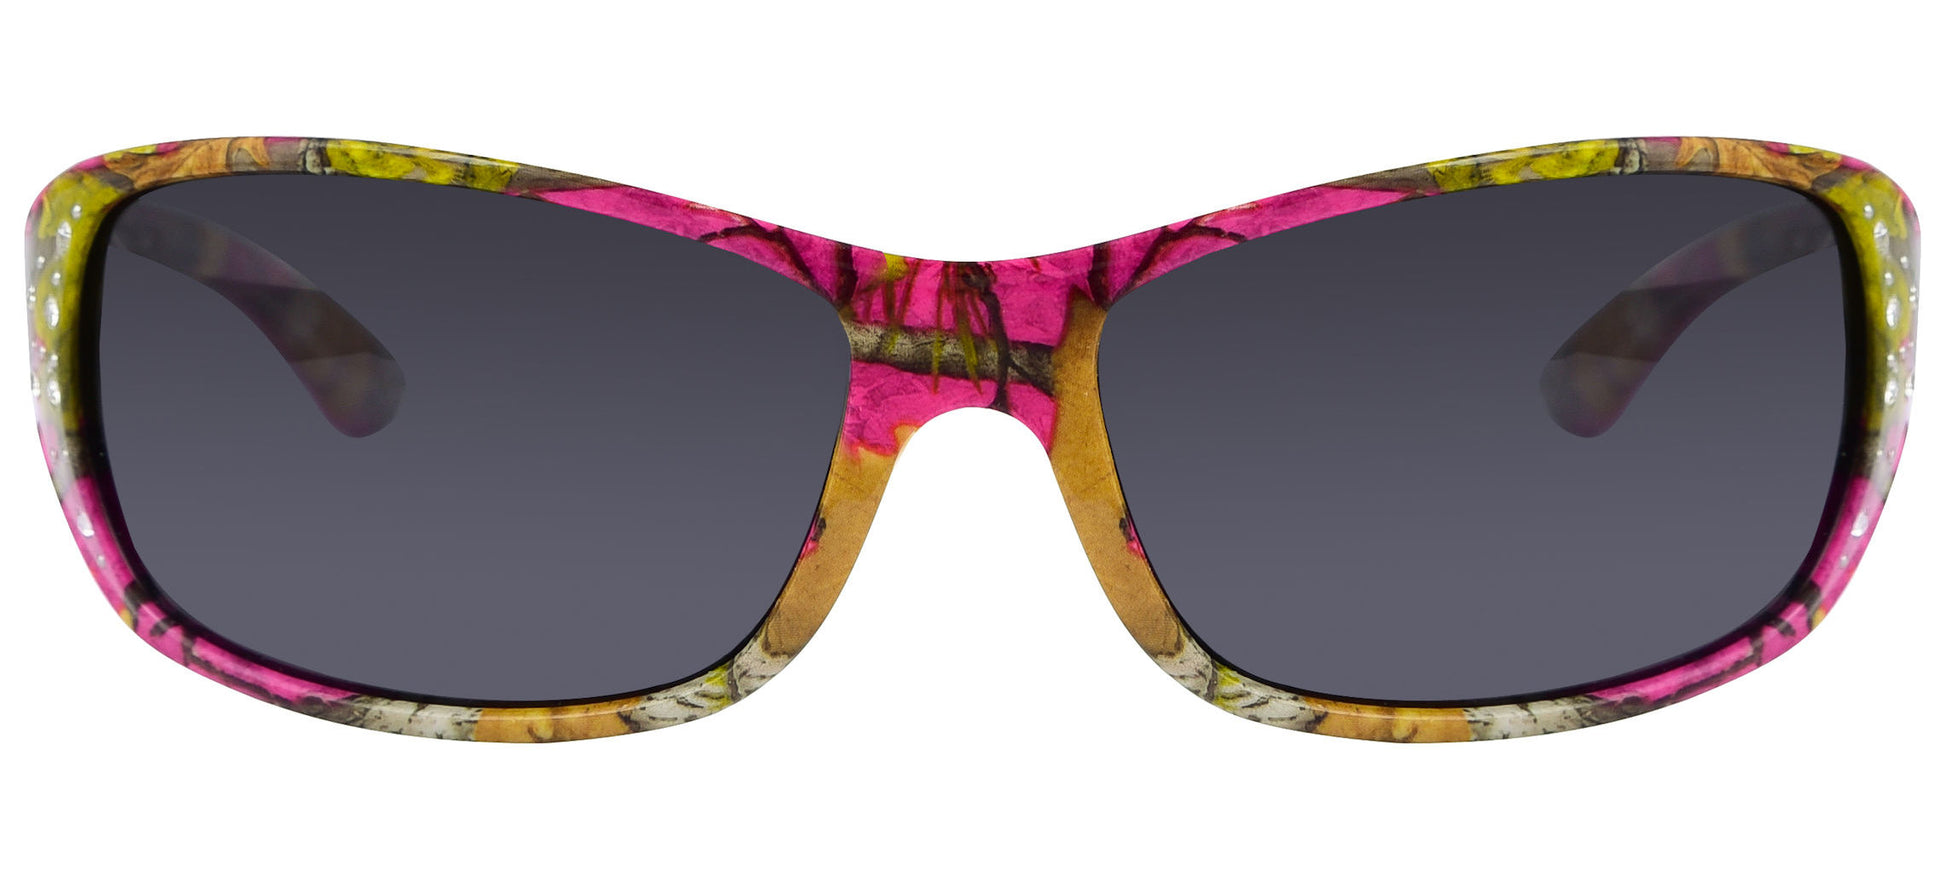 Third image: Polarized Hot Pink Camo Sunglasses for Women - Elettra - Hot Pink Camo Frame - Smoke Lens